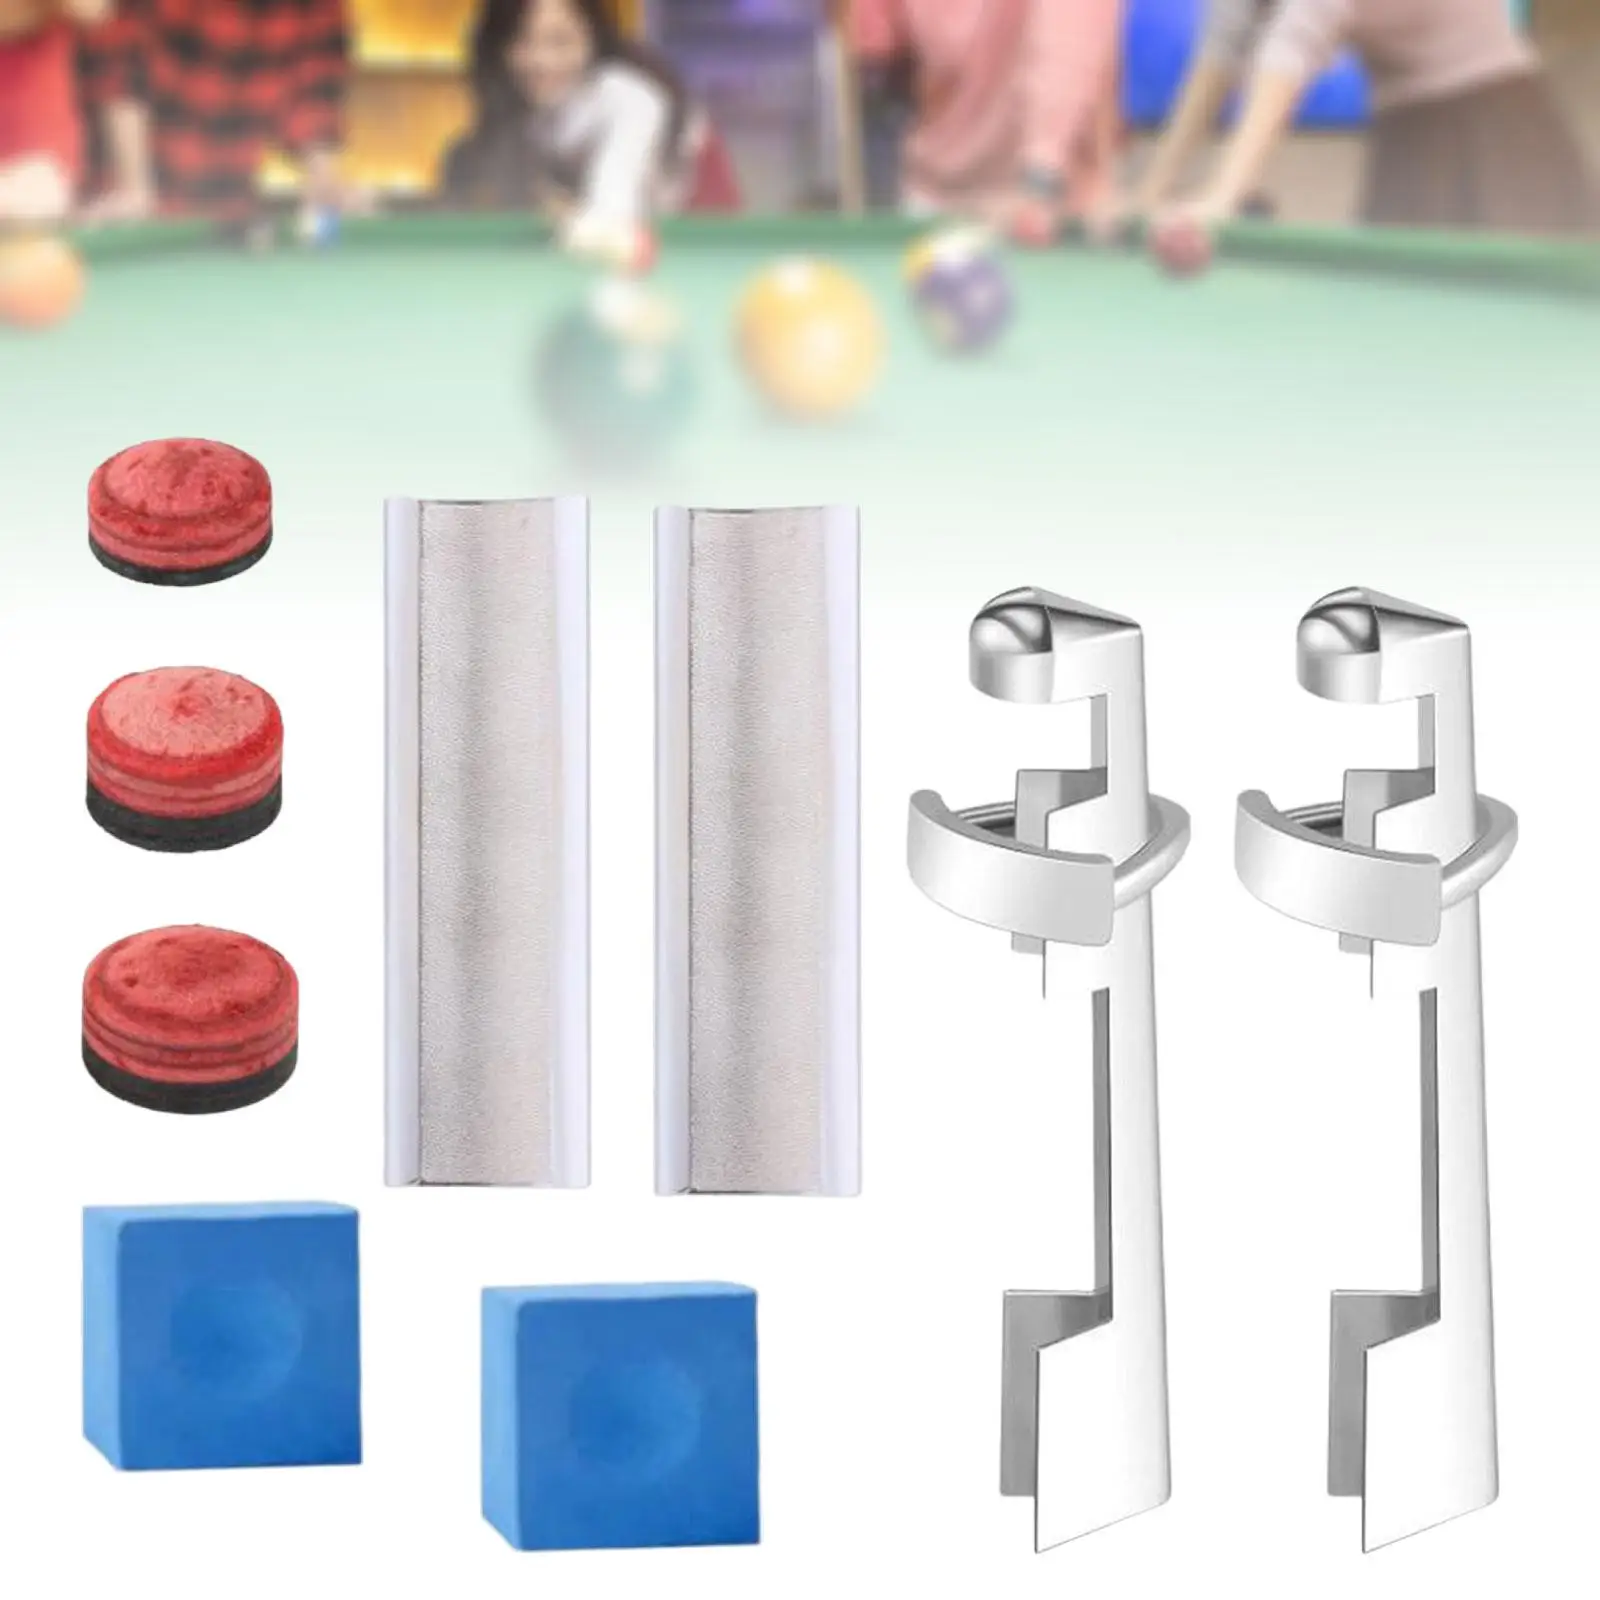 9x Pool Cue Tip Repair Kit Portable Chalk Cubes Snooker Billiards Cue Stick